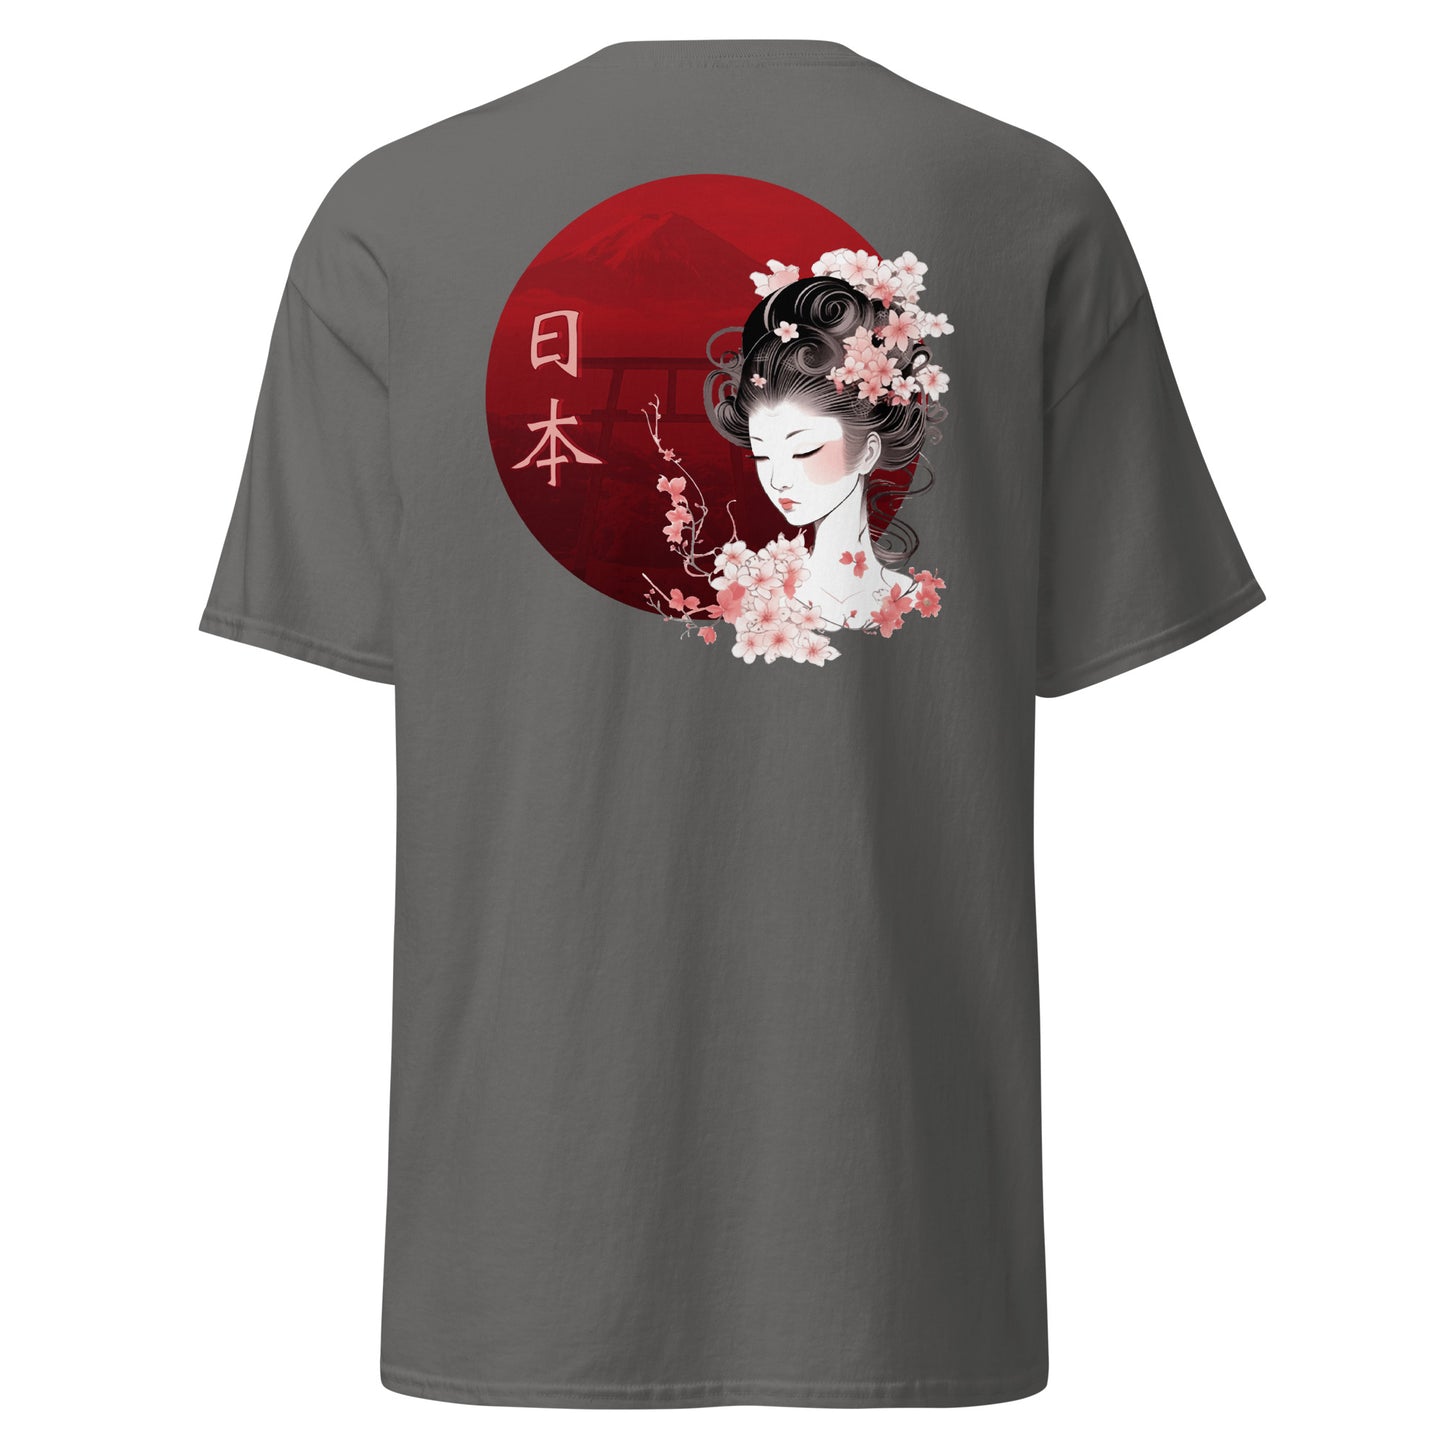 Gray High Quality Tee - Back Design of Japanese Geisha Print